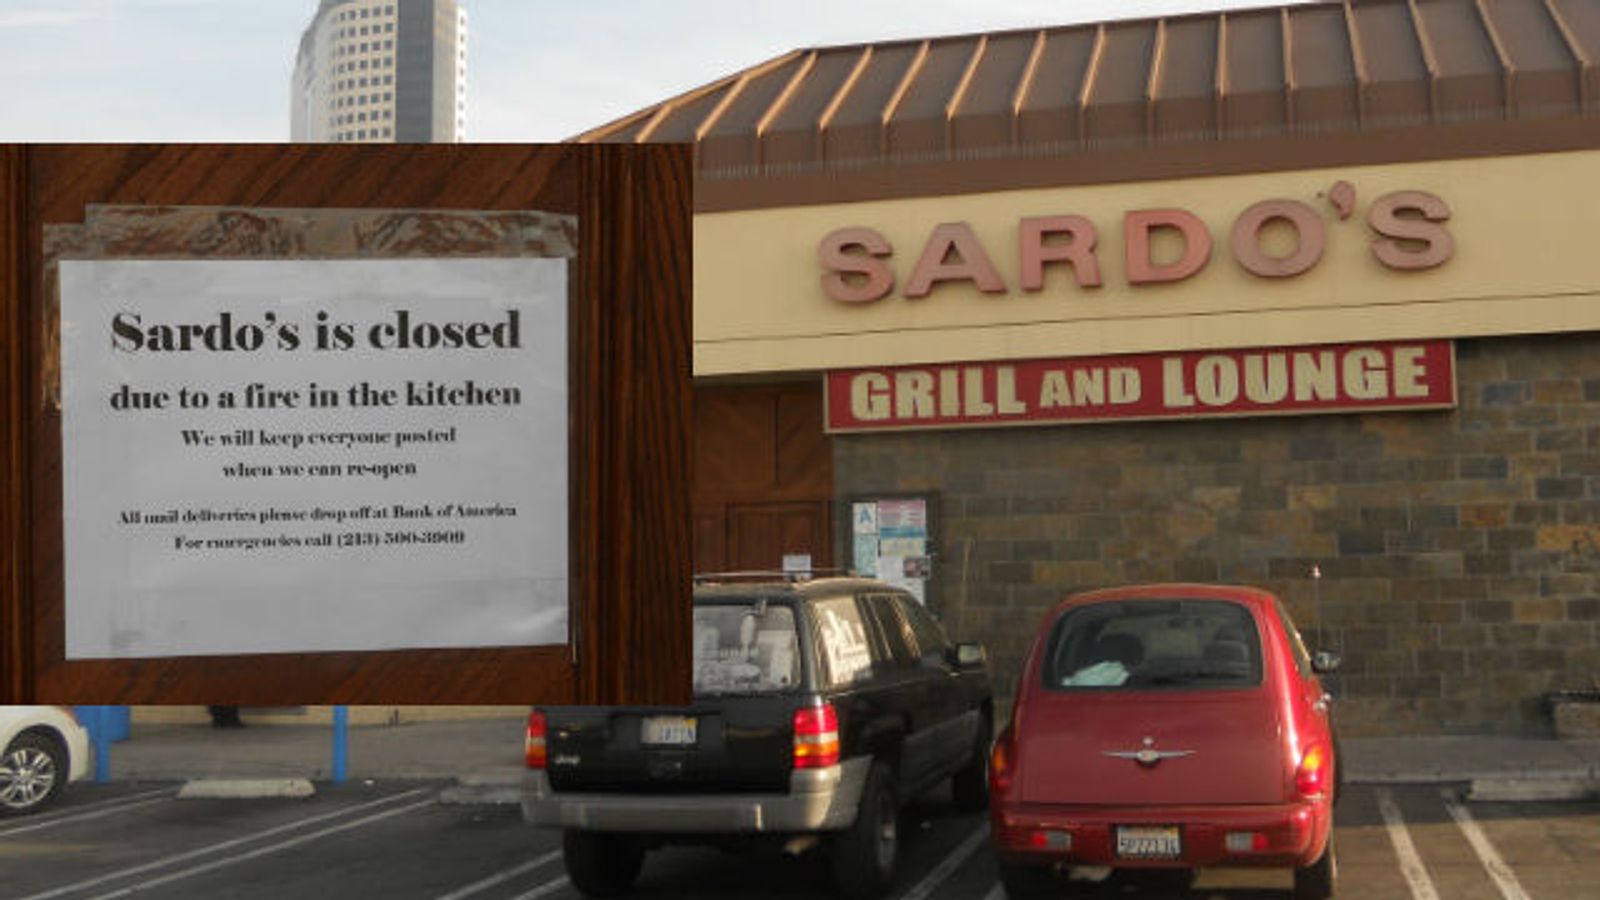 PSK Home Sardo's Grill & Lounge Damaged by Fire Monday